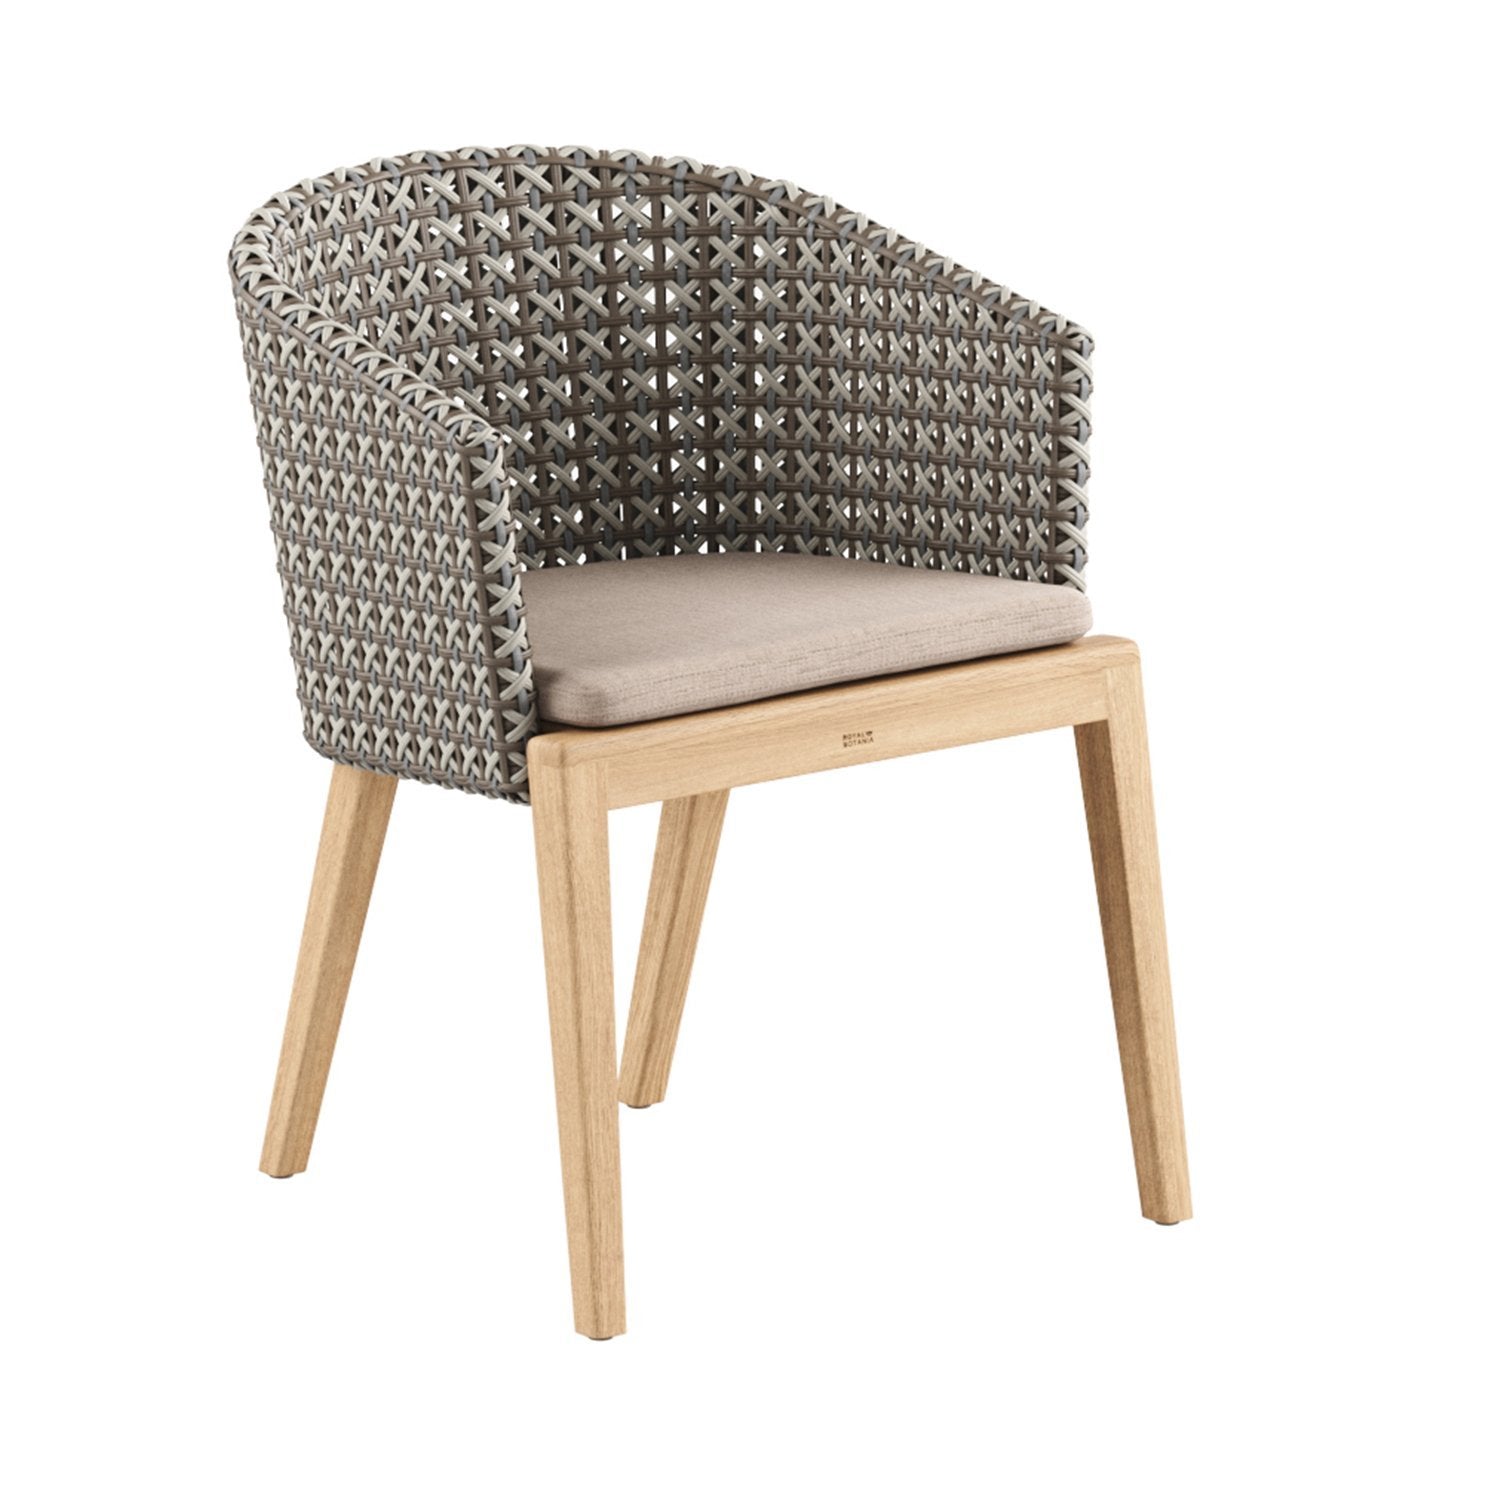 Woven Calypso Chair for outdoors